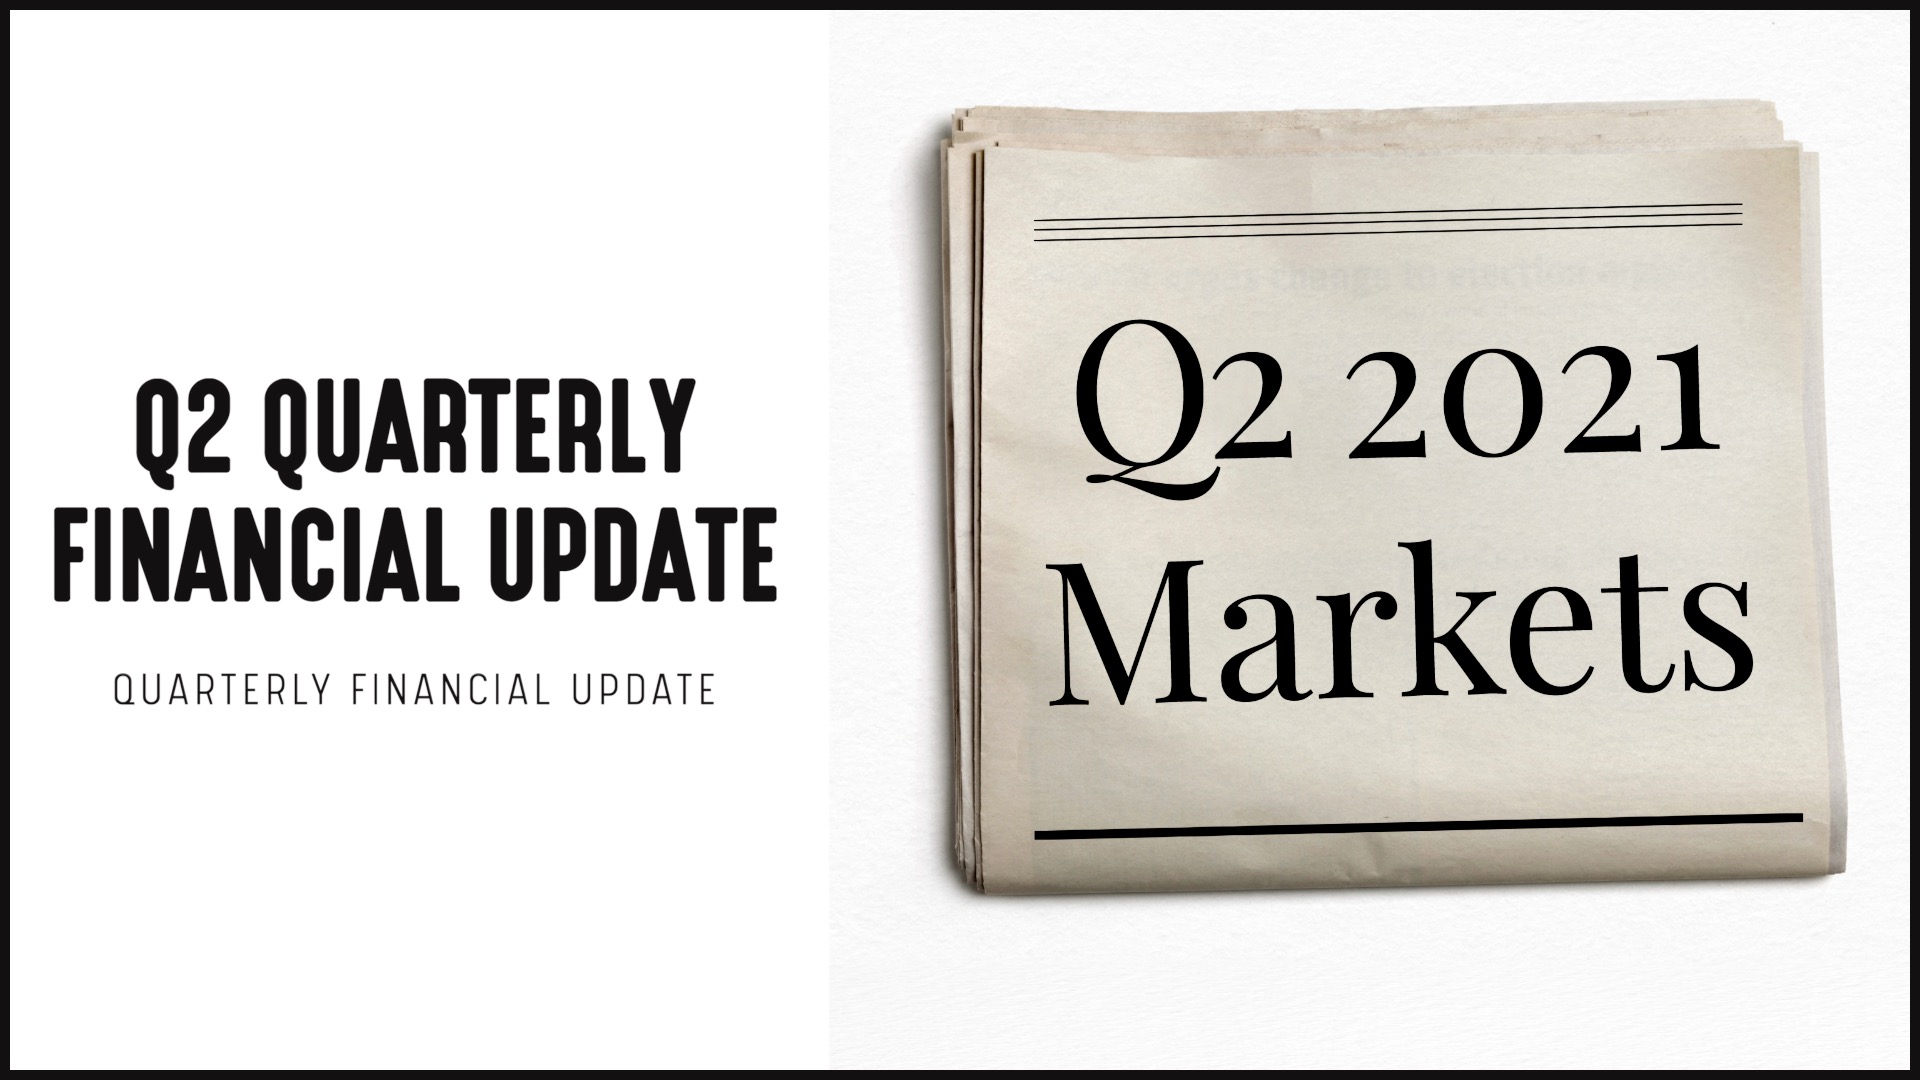 [NEW] Market Update Campaign | Q2 2021 Financial Dashboard